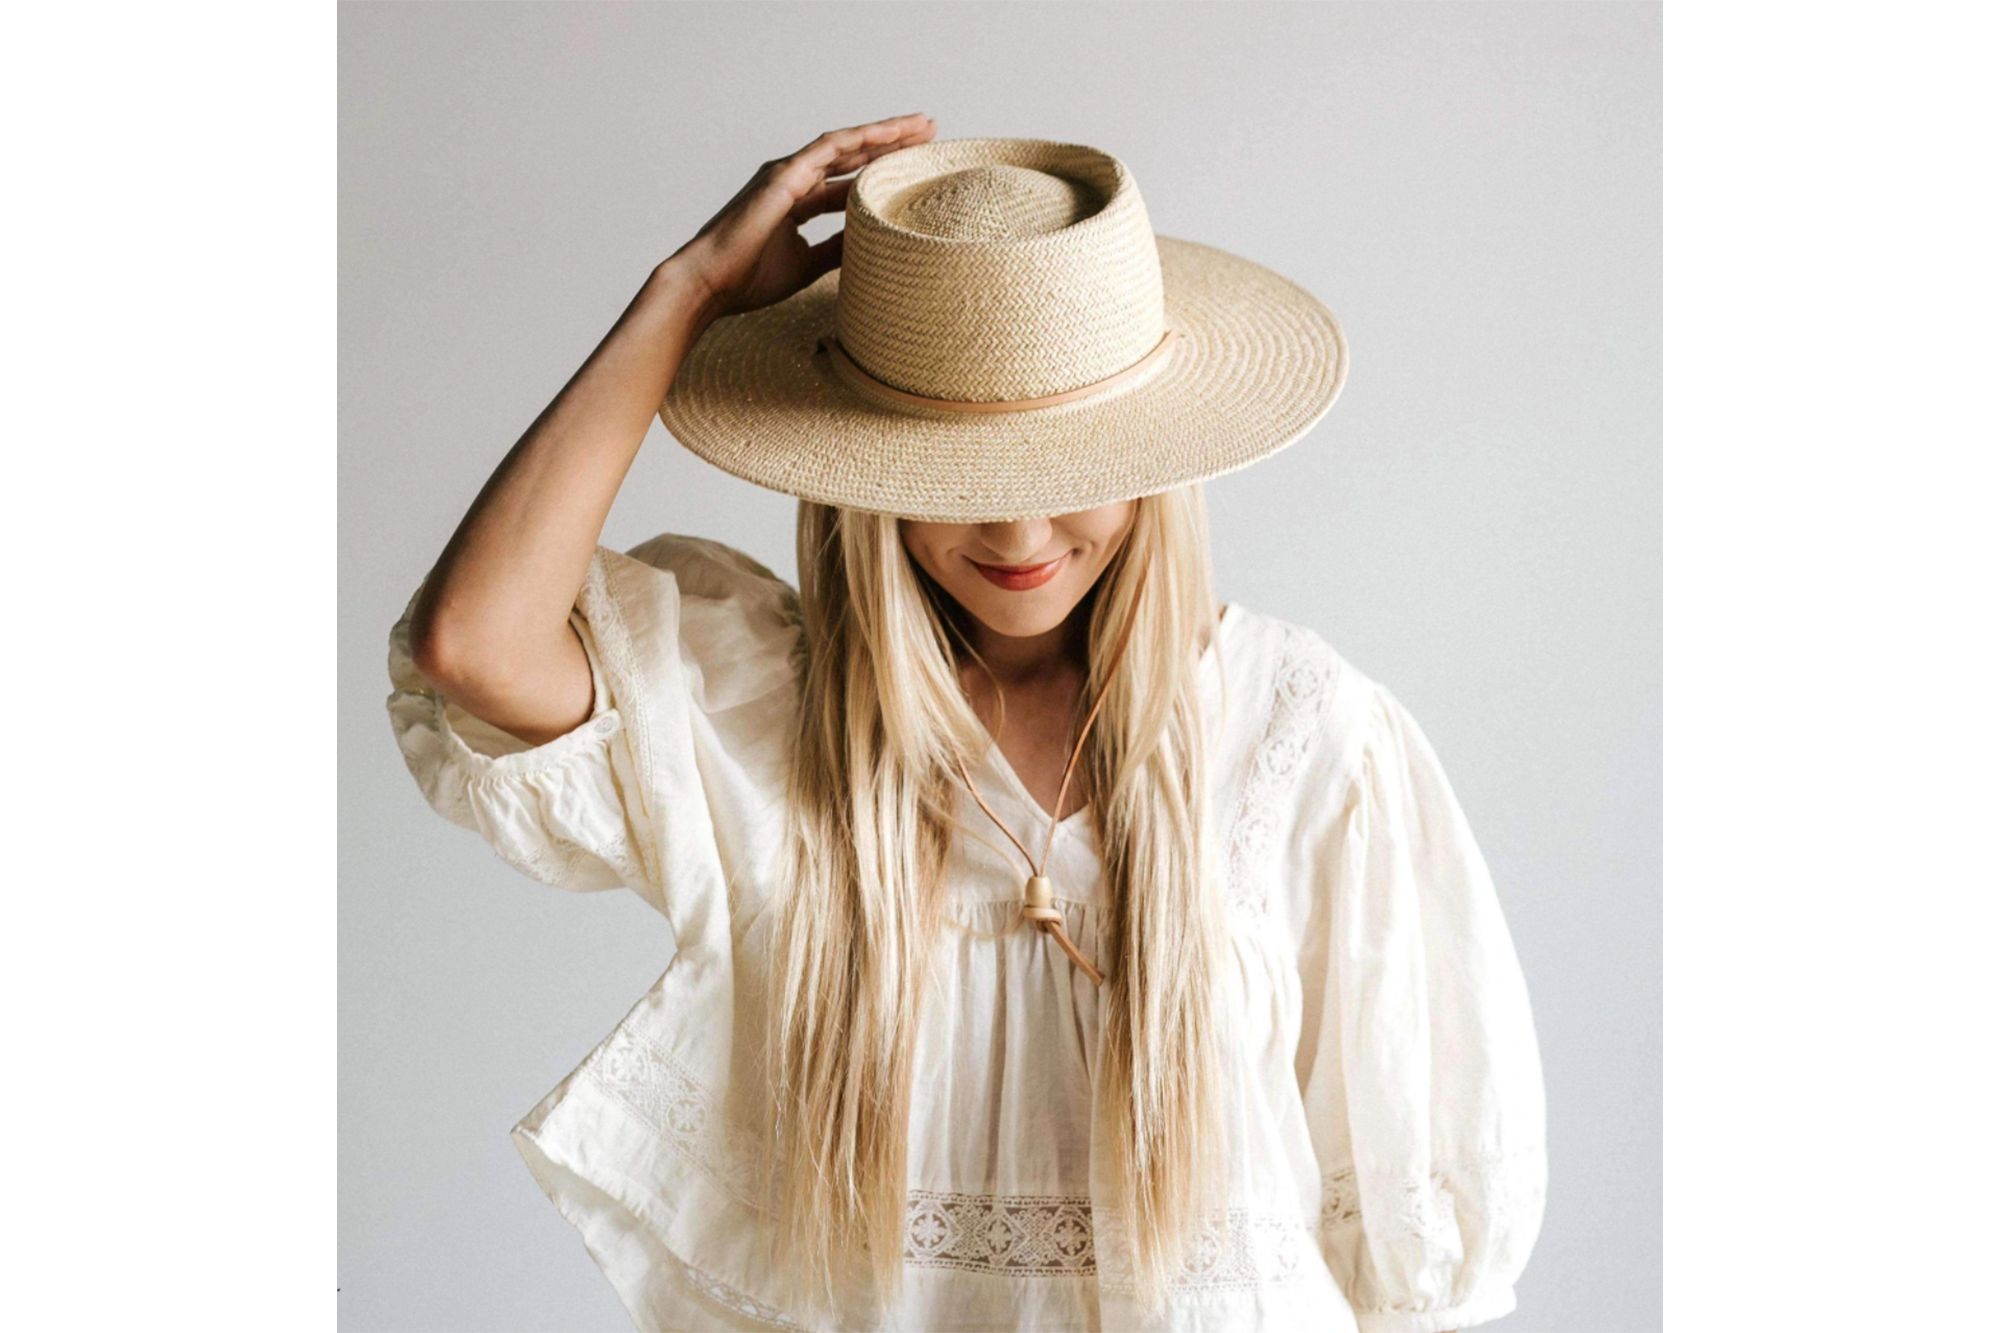 Woman wearing straw wide brim hat